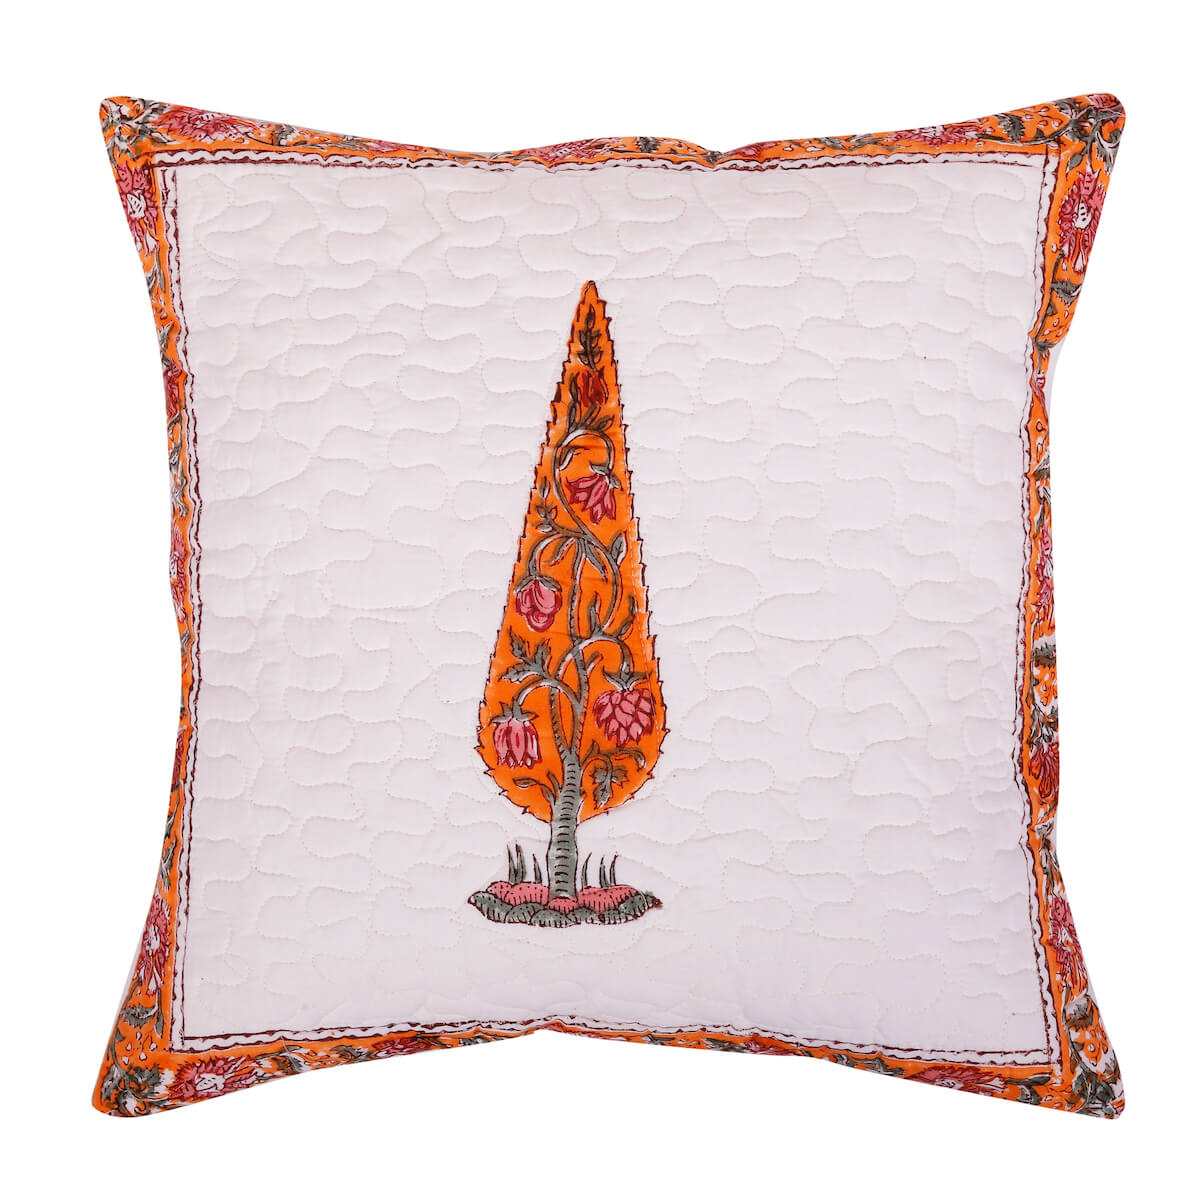 Jaipur Block Print Leaf Decorative Quilting Cotton Cushion Cover Size 16"x16"